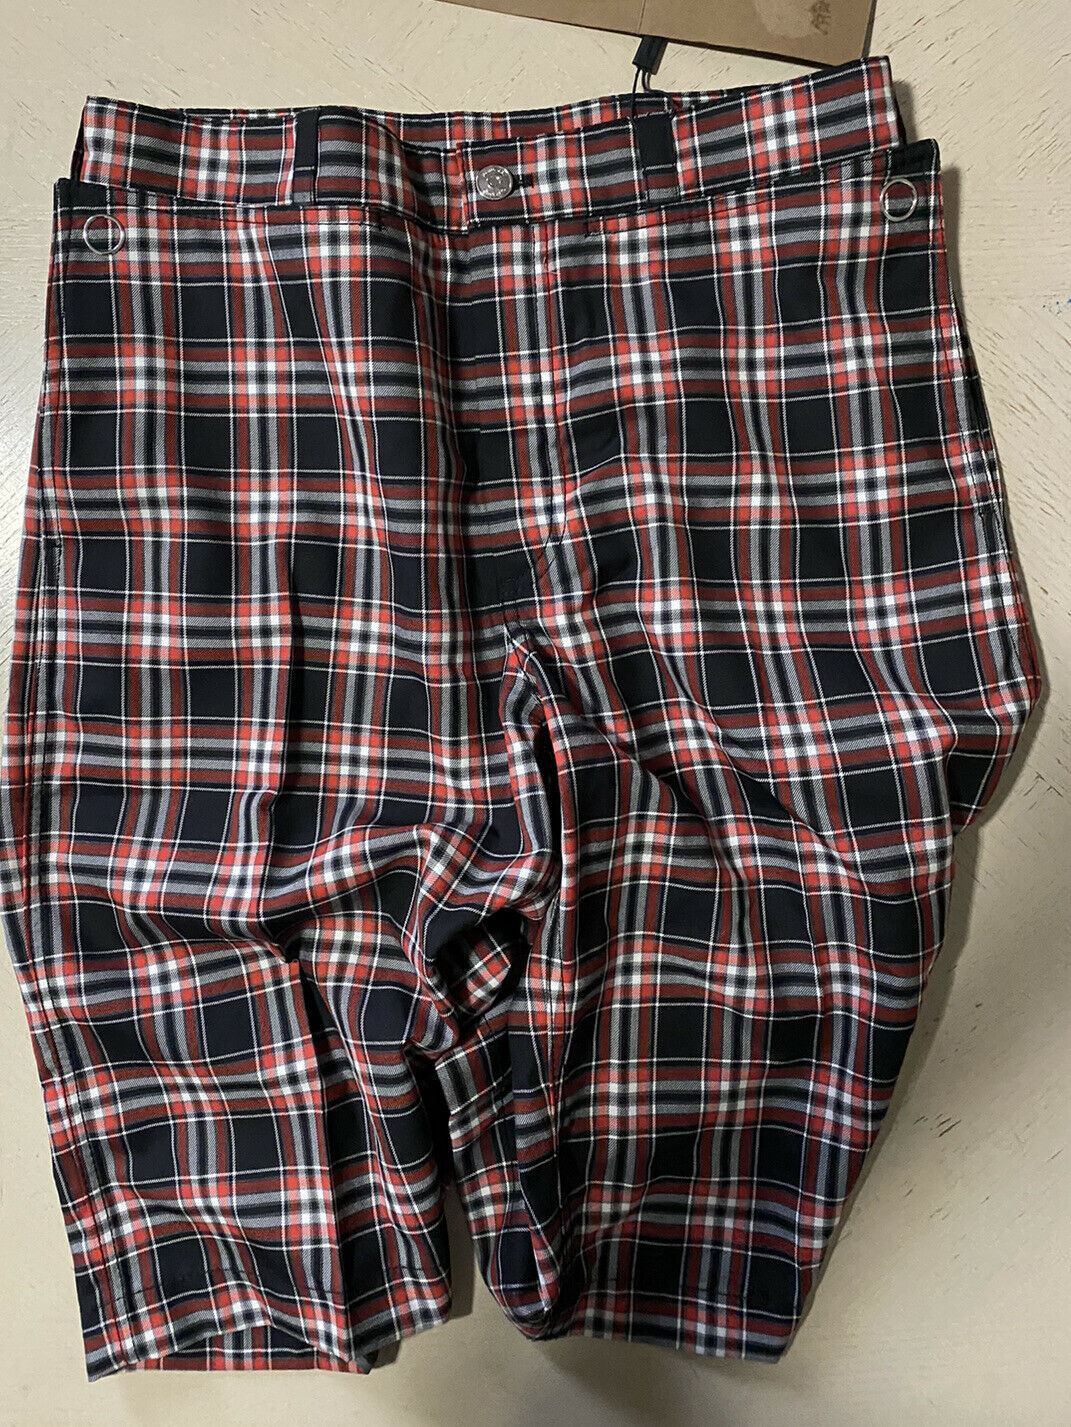 NWT $550 Burberry Men’s Short pants Black/Red Size 36 US ( 52 Eu )